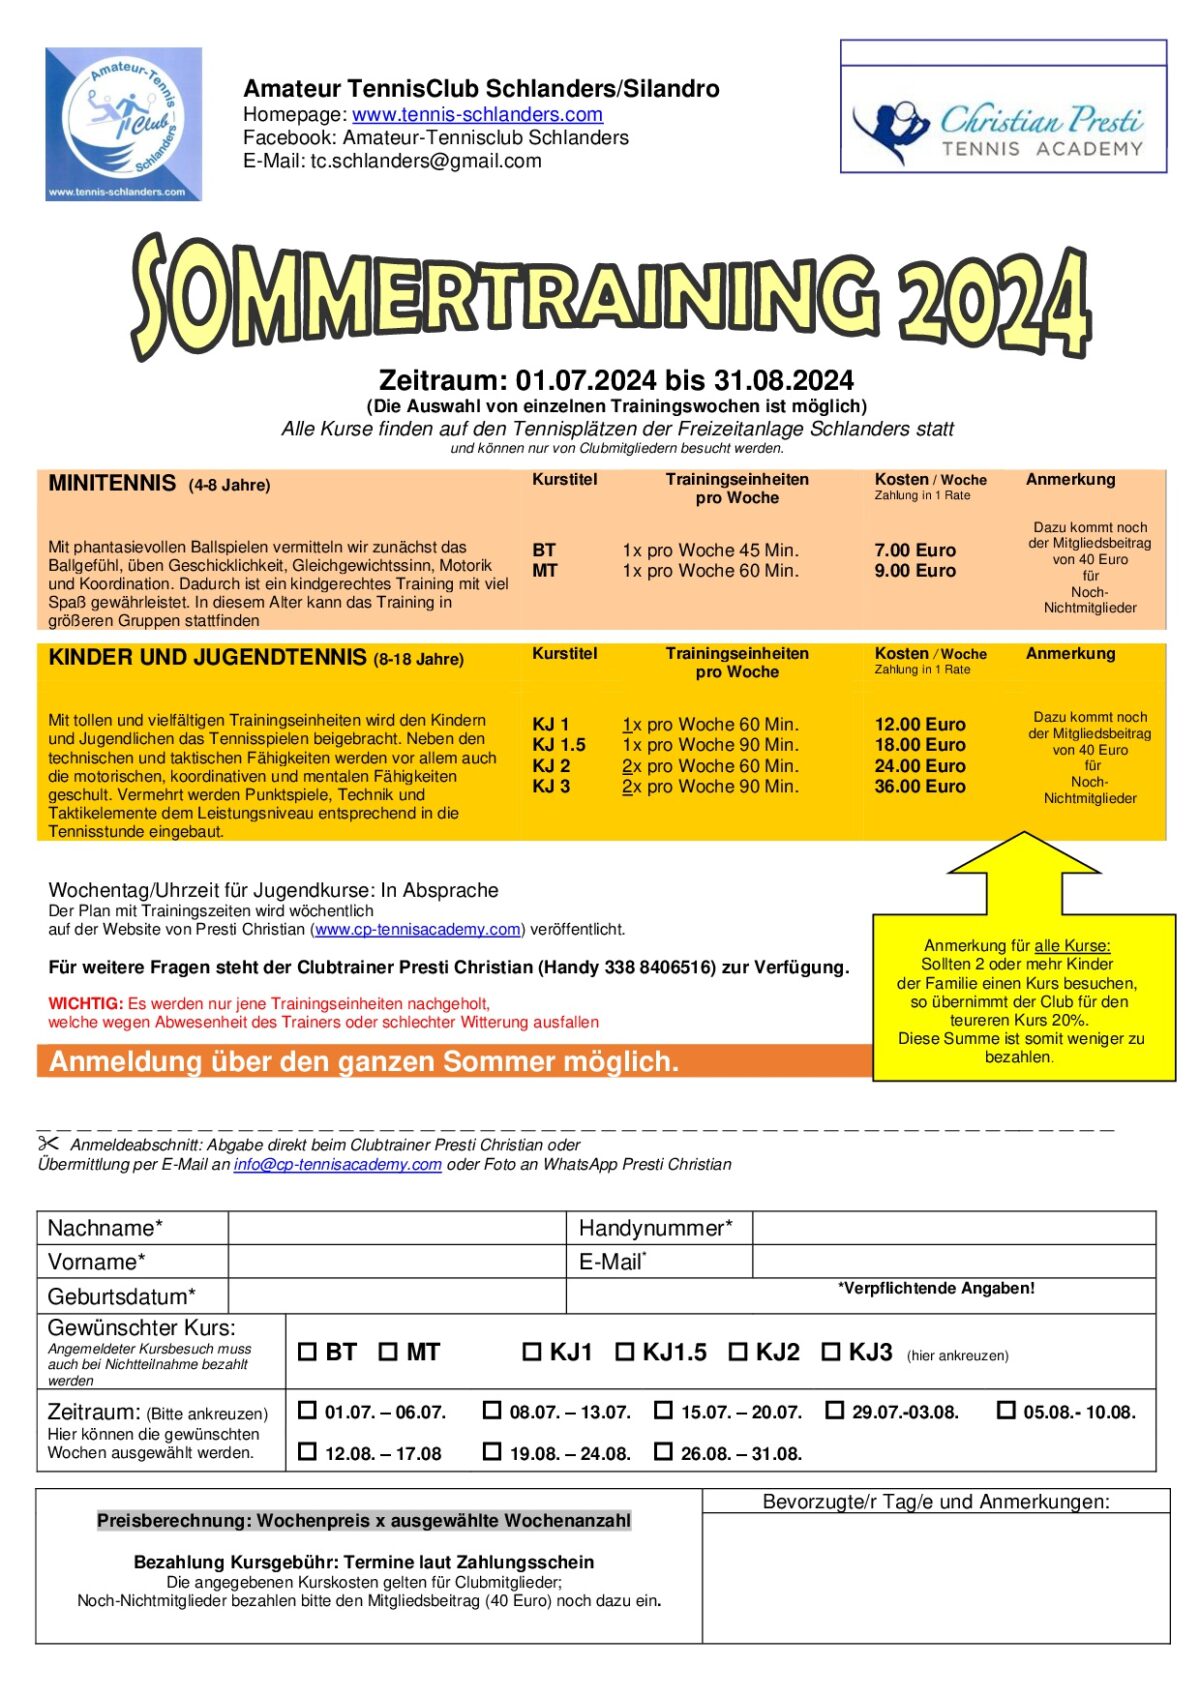 Flyer Sommertraining 2024-ATC Schlanders